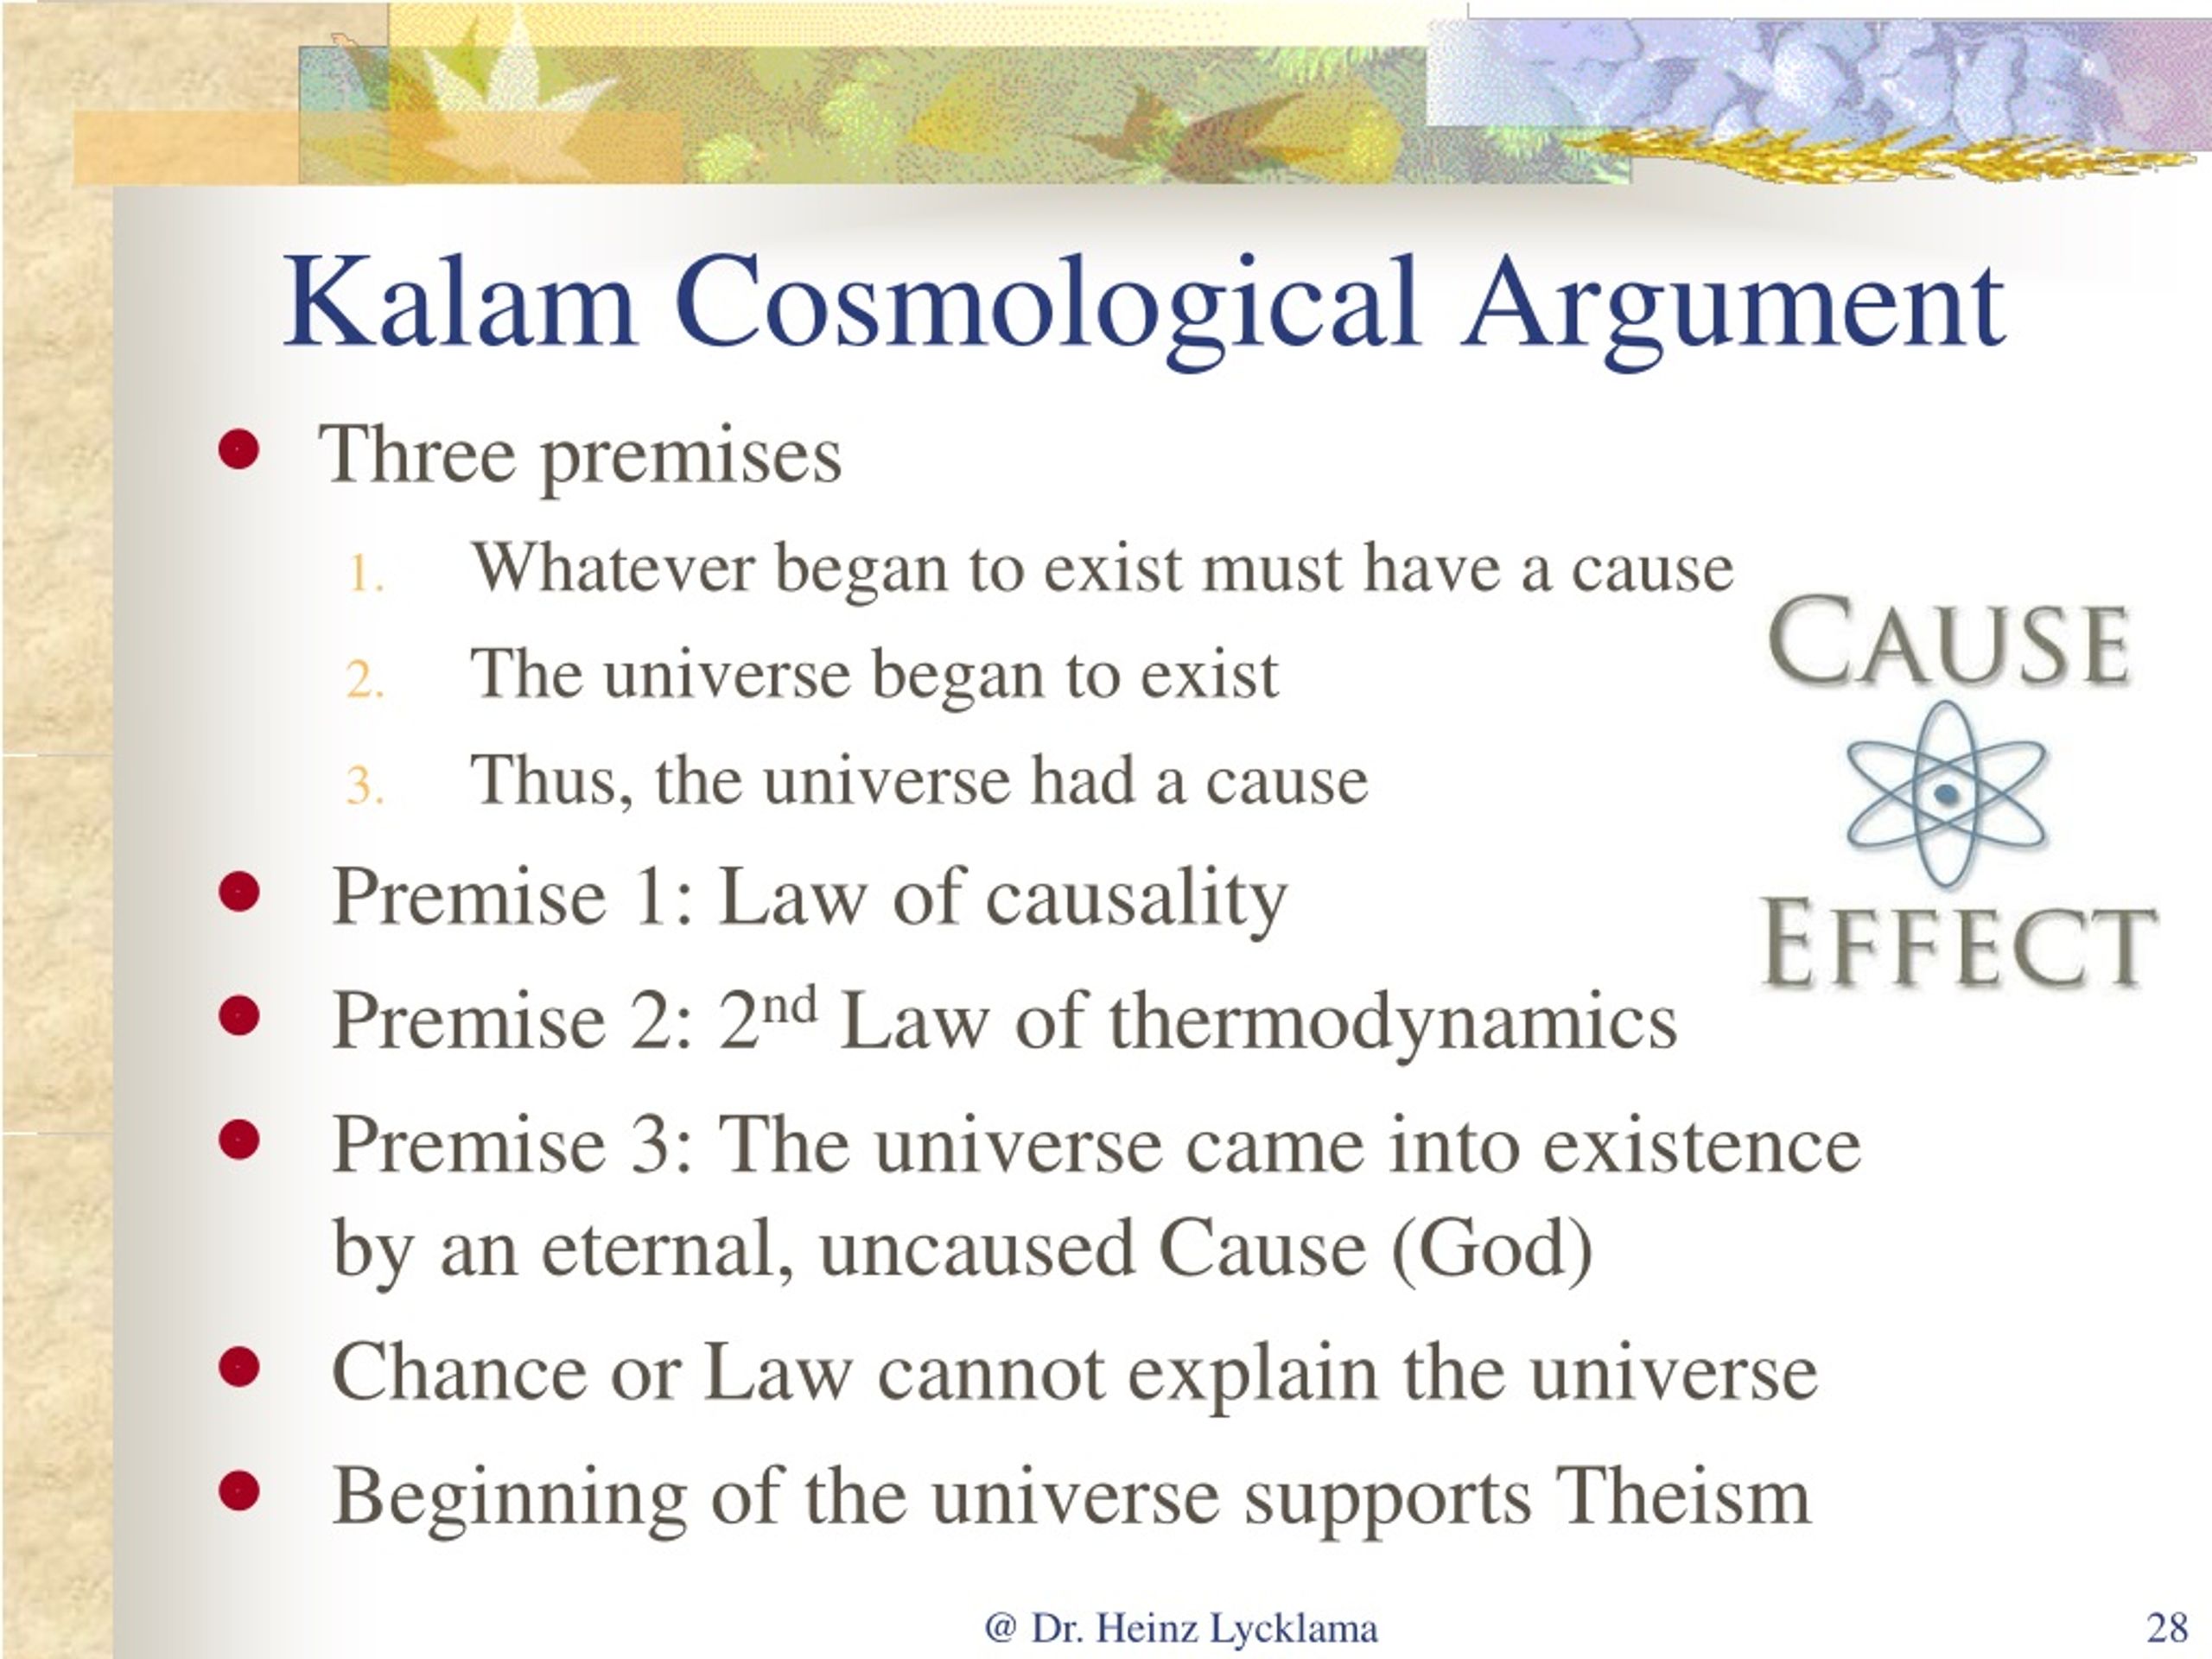 the kalam cosmological argument essay